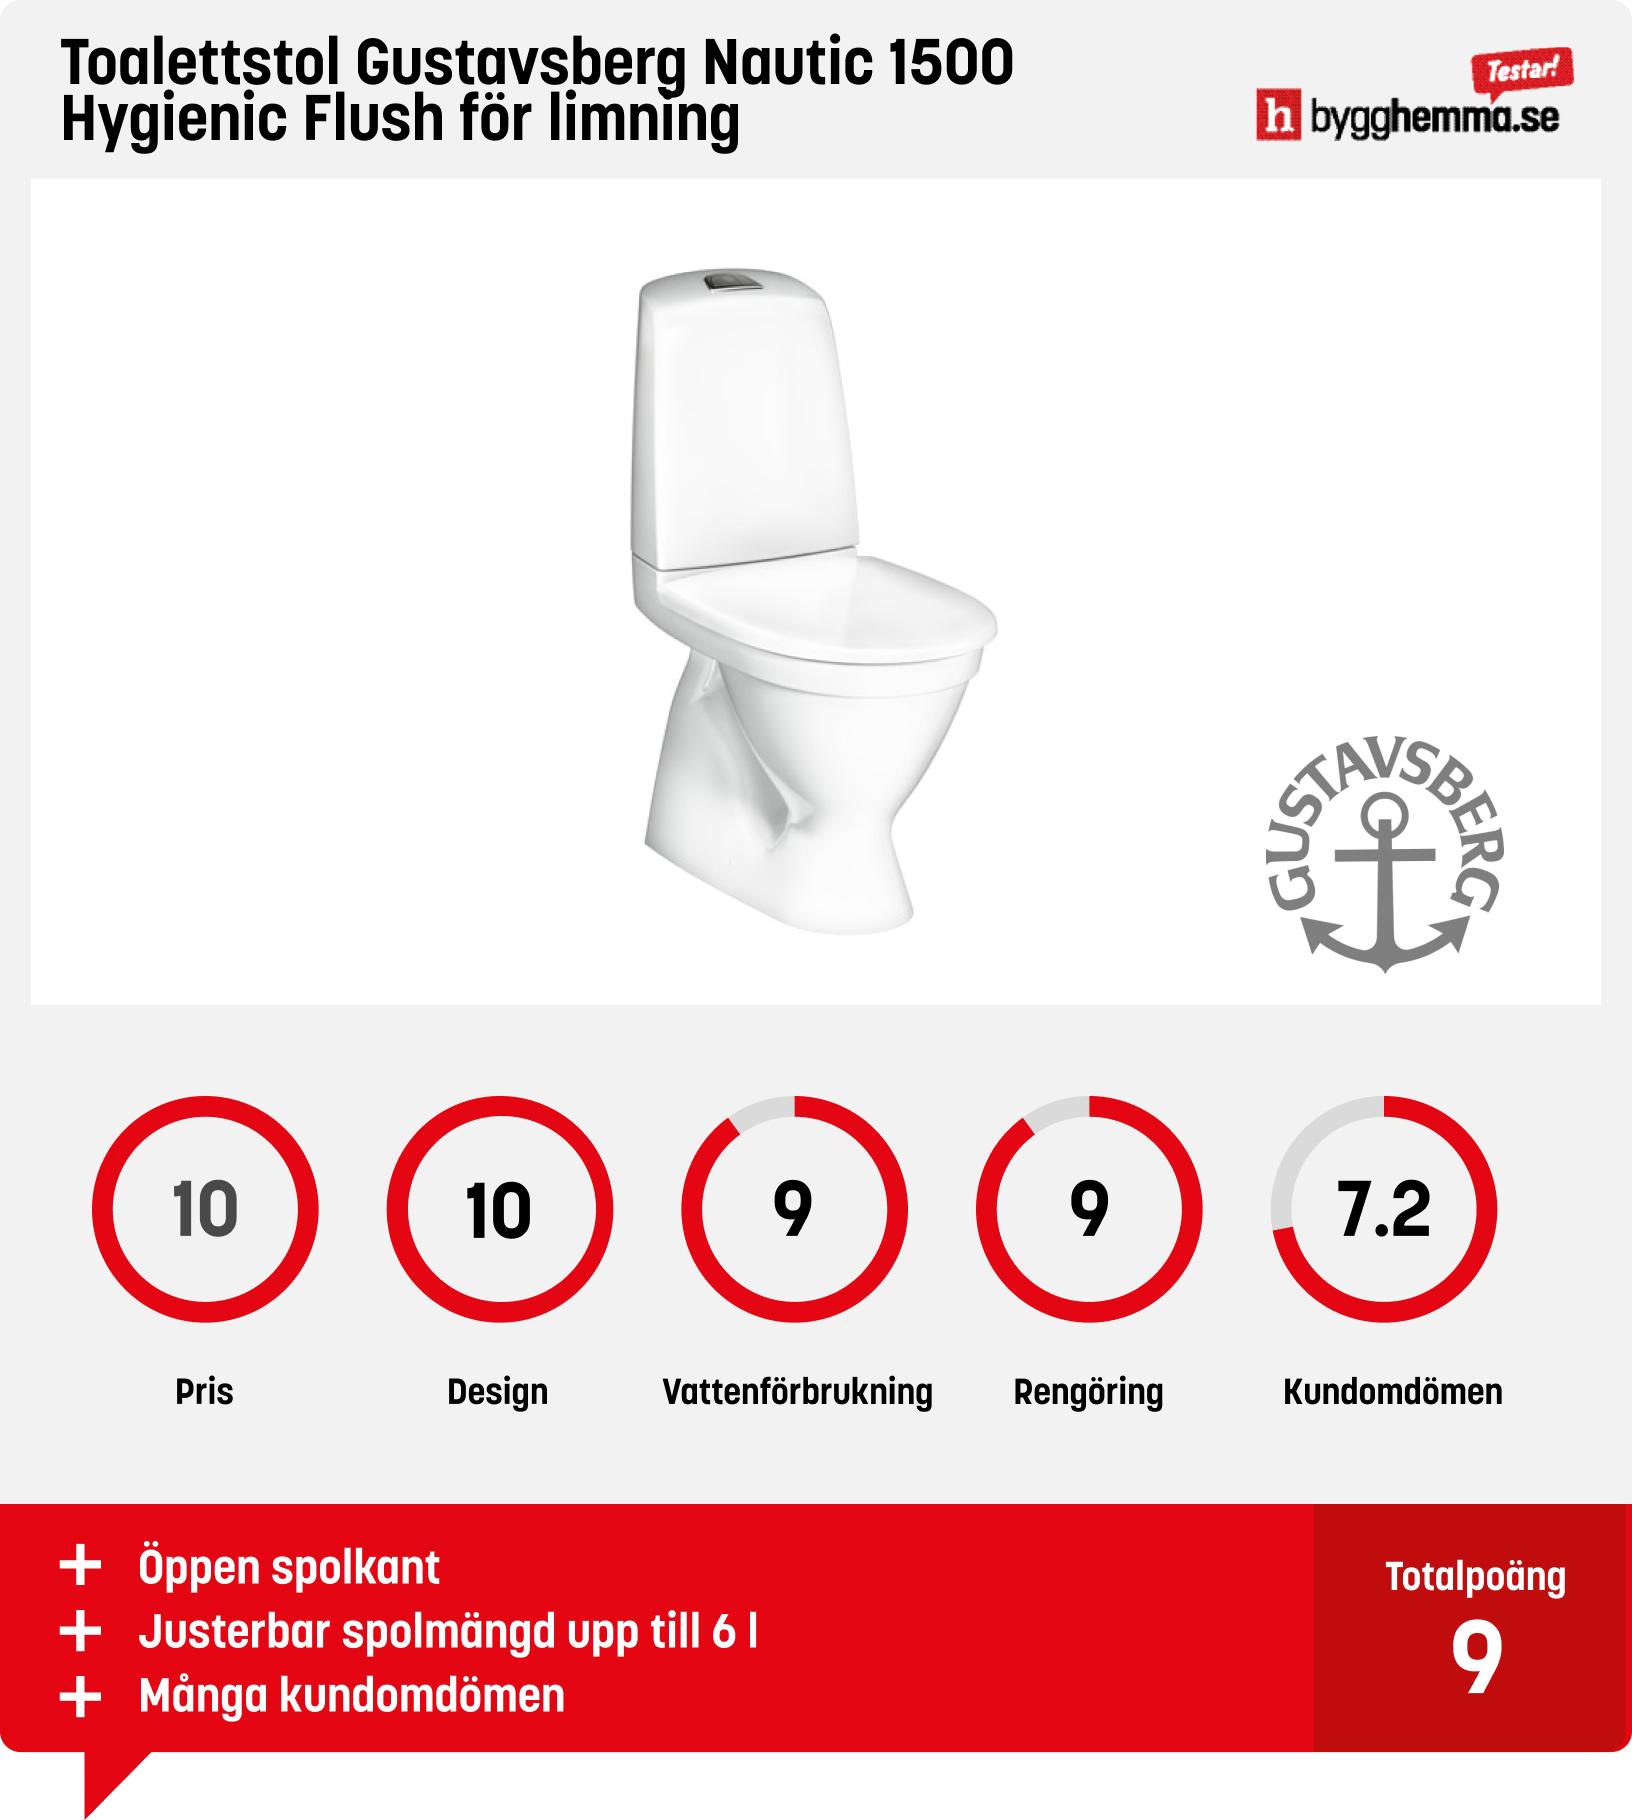 Toalettstol bäst i test - Toalettstol Gustavsberg Nautic 1500 Hygienic Flush för limning